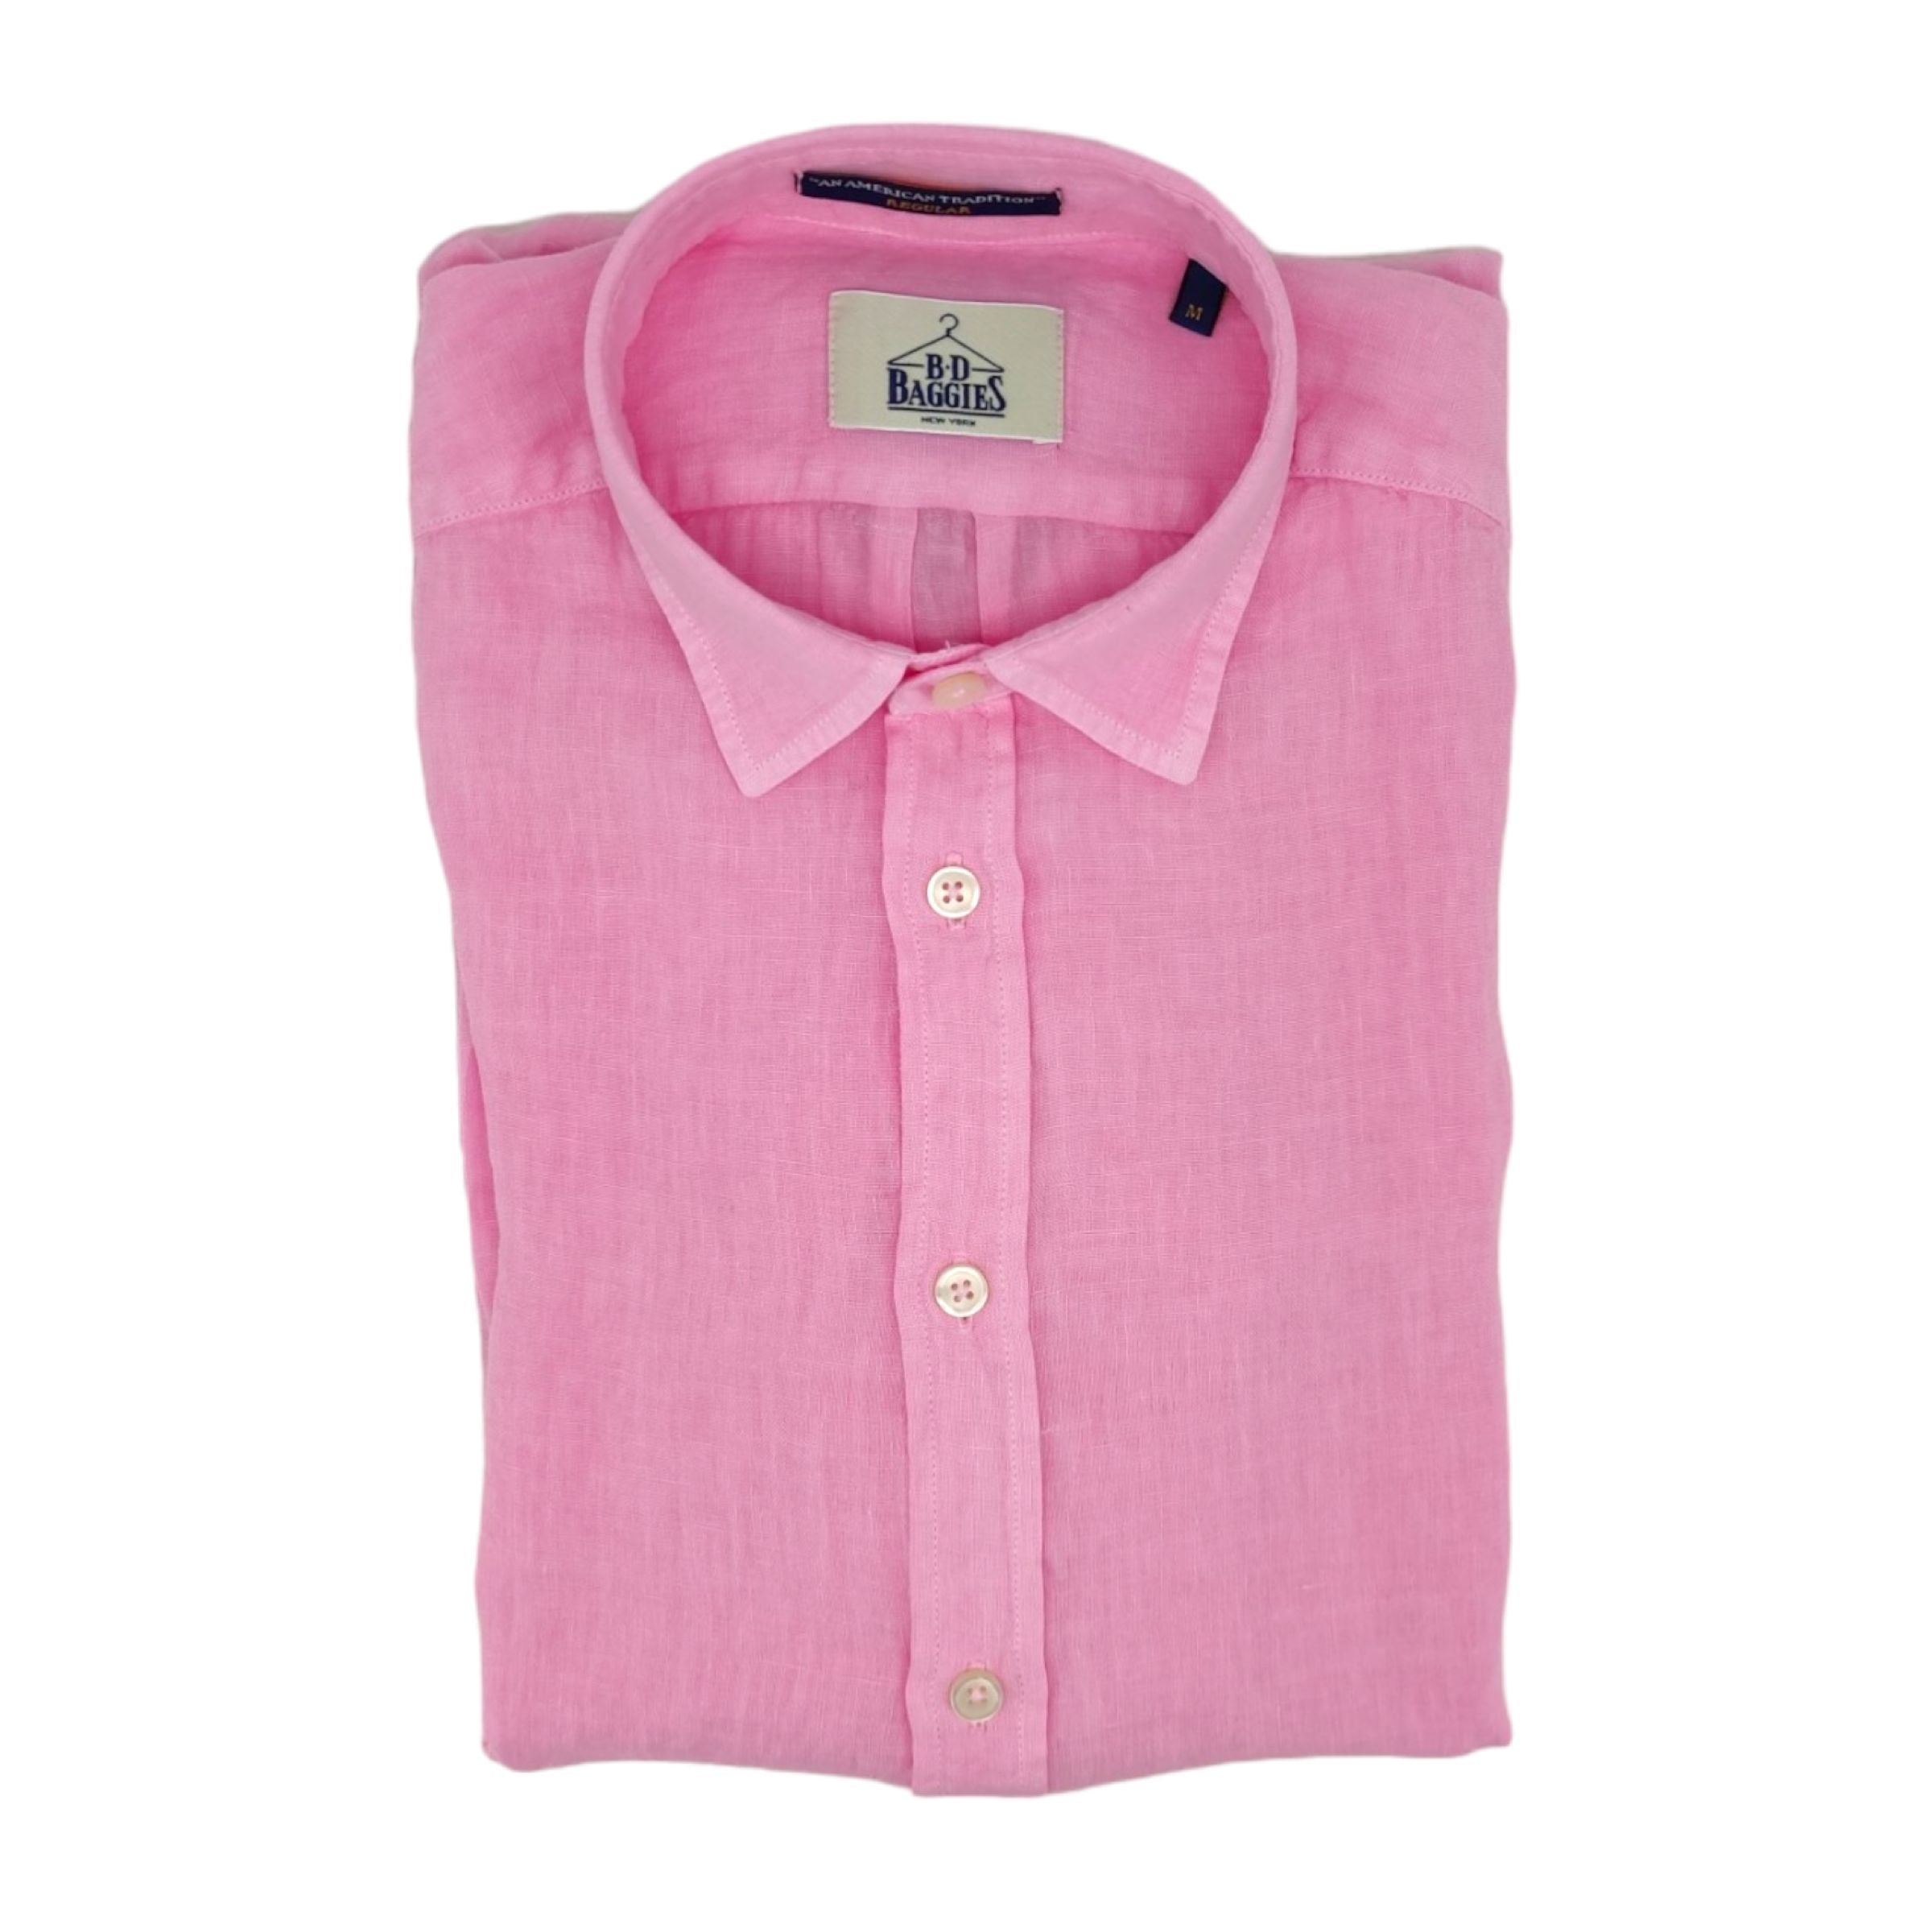 Men's Bradford Lino Shirt Bright Pink 